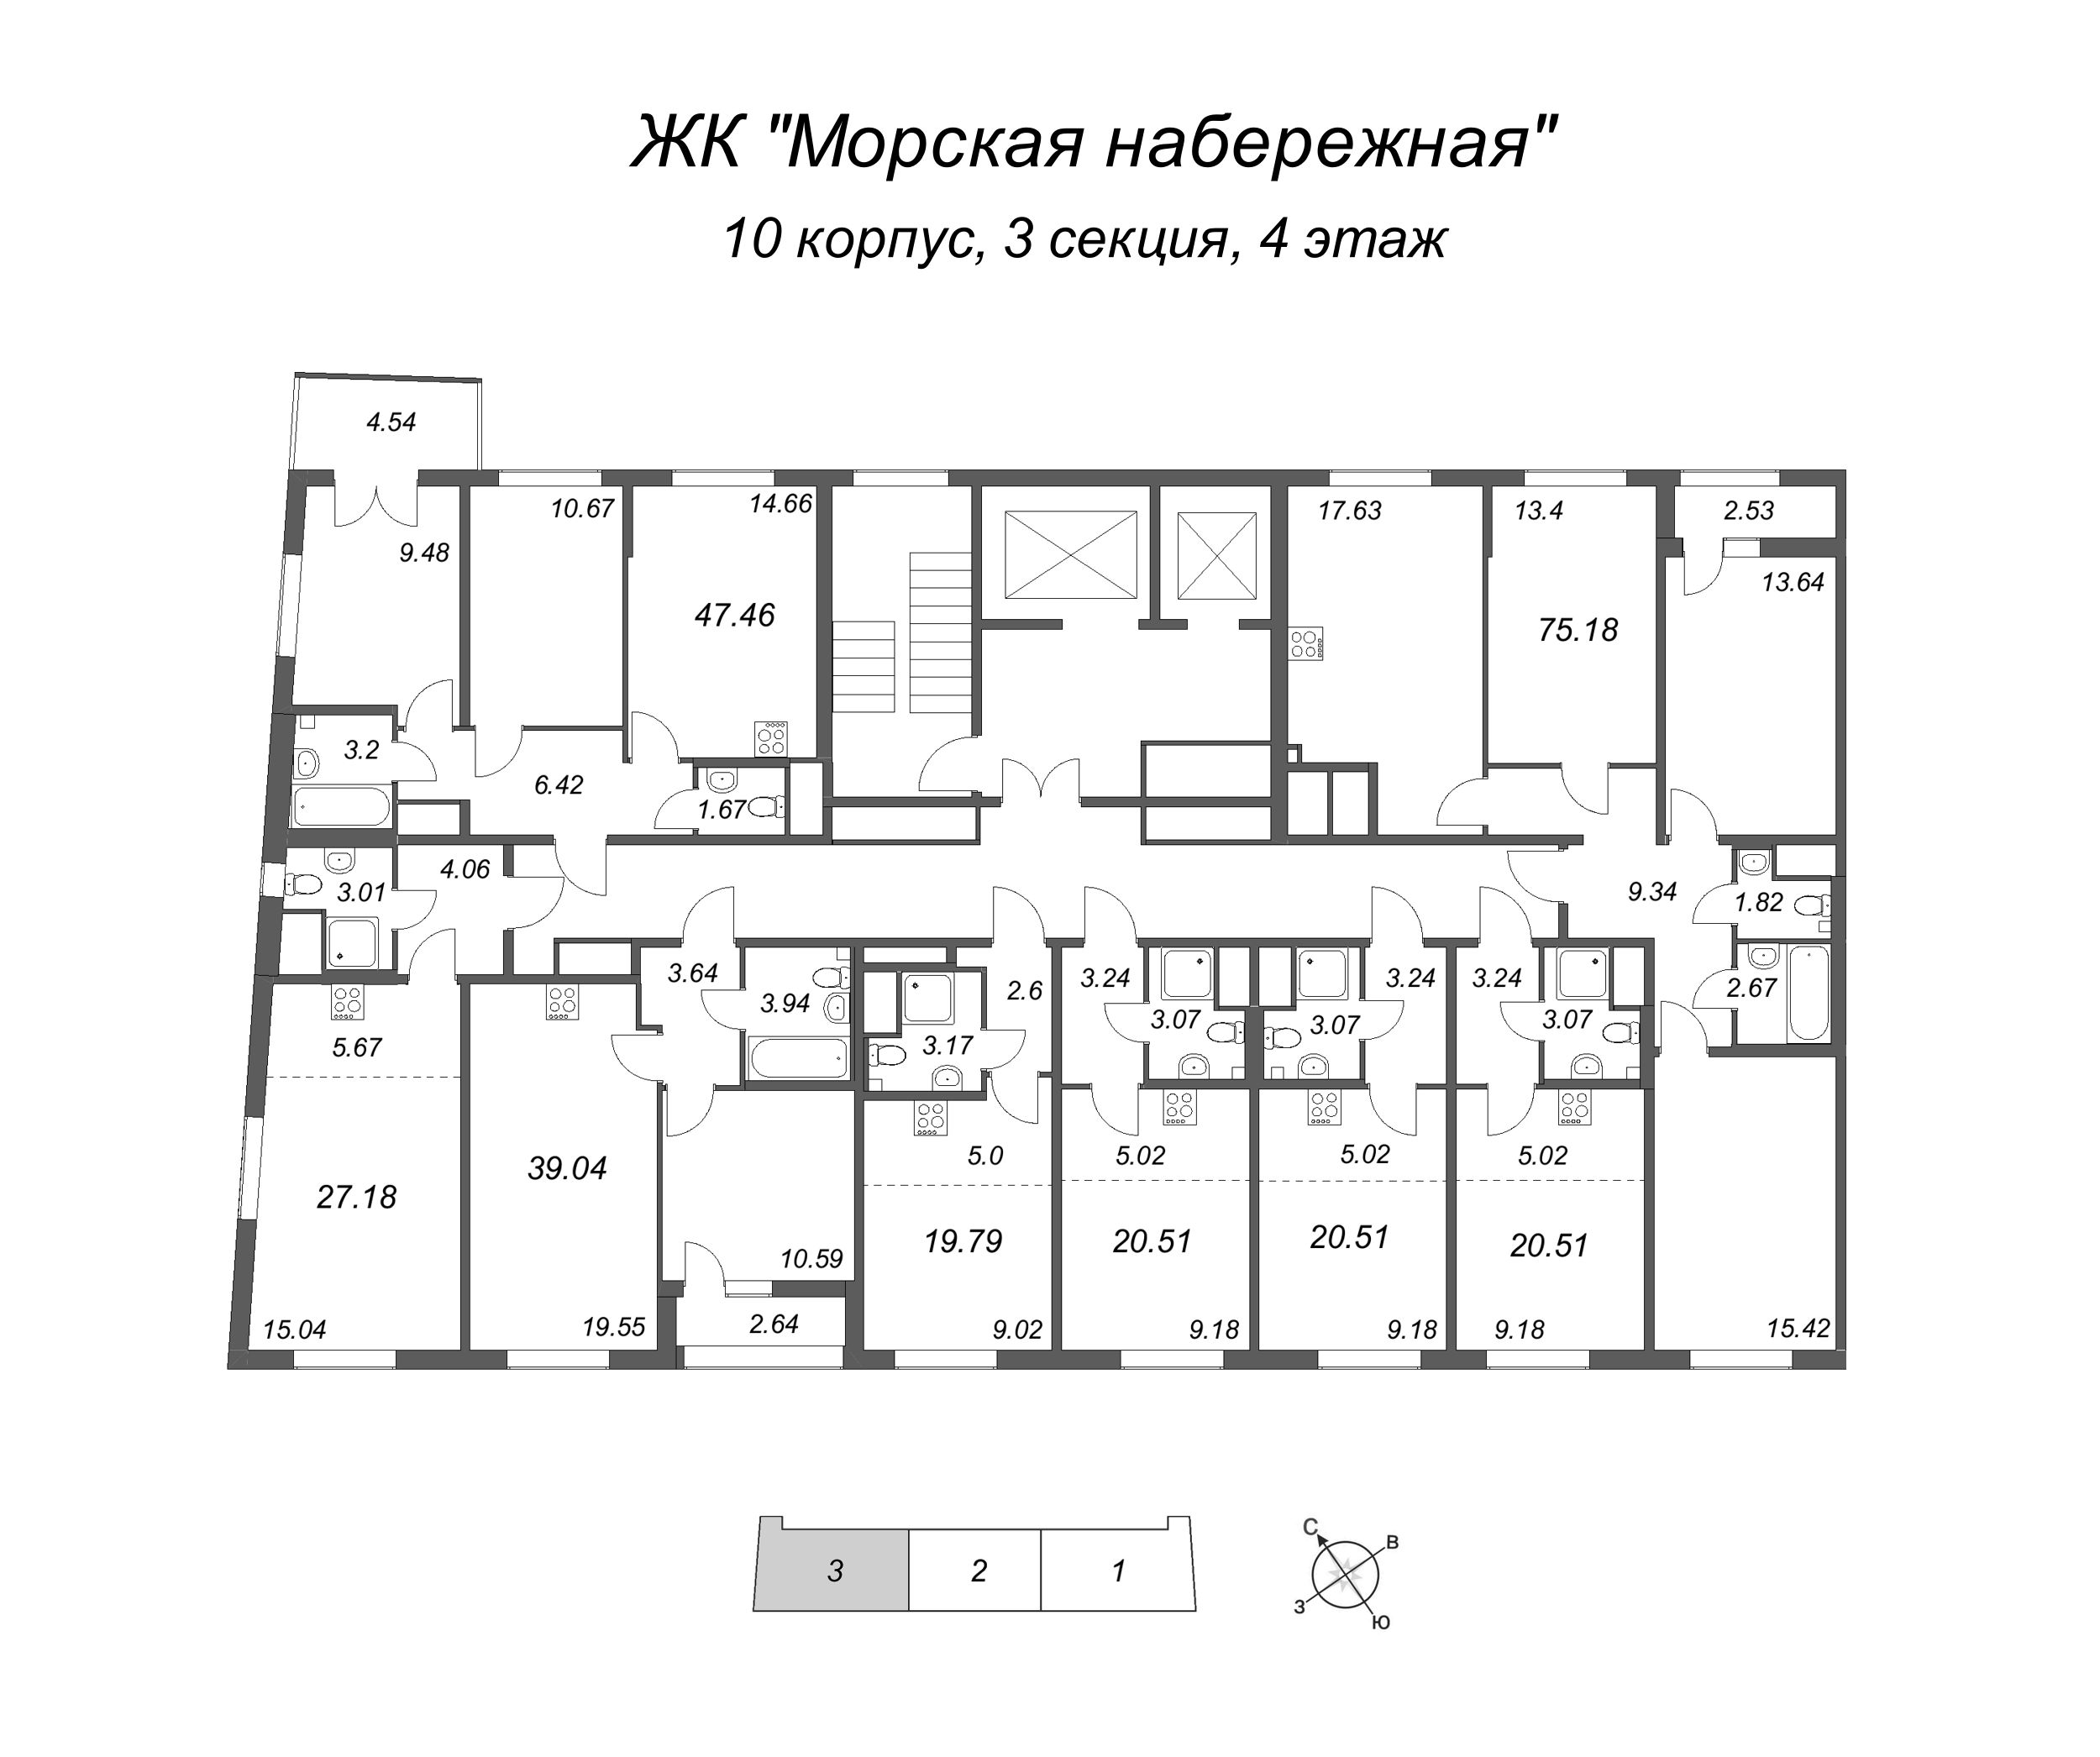 4-комнатная (Евро) квартира, 75.18 м² - планировка этажа